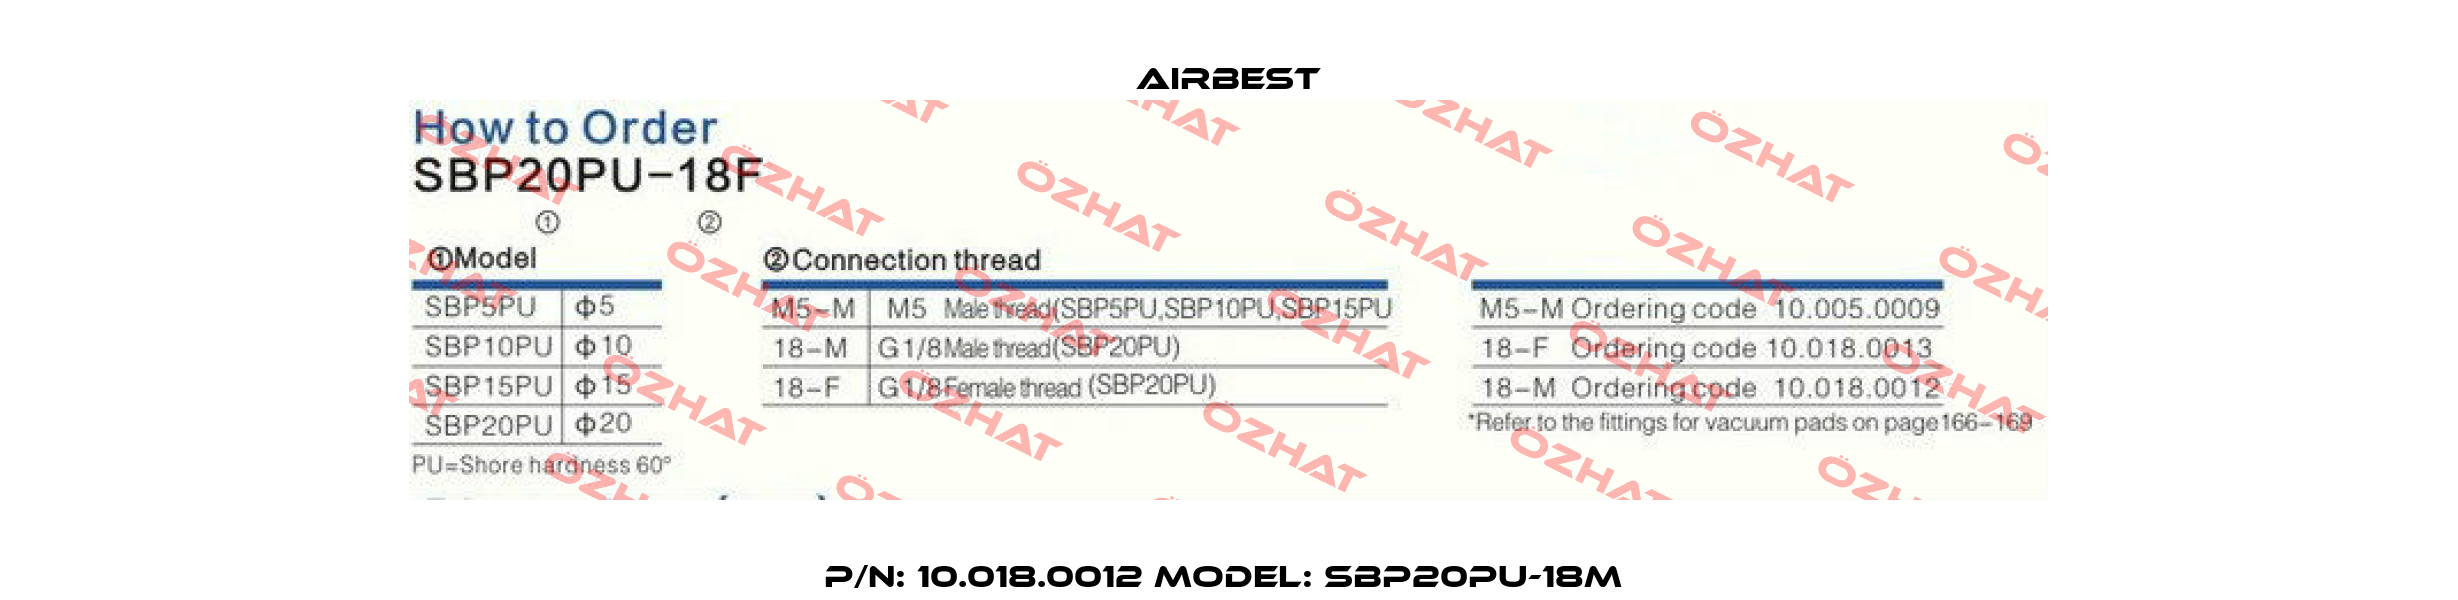 P/N: 10.018.0012 Model: SBP20PU-18M  Airbest